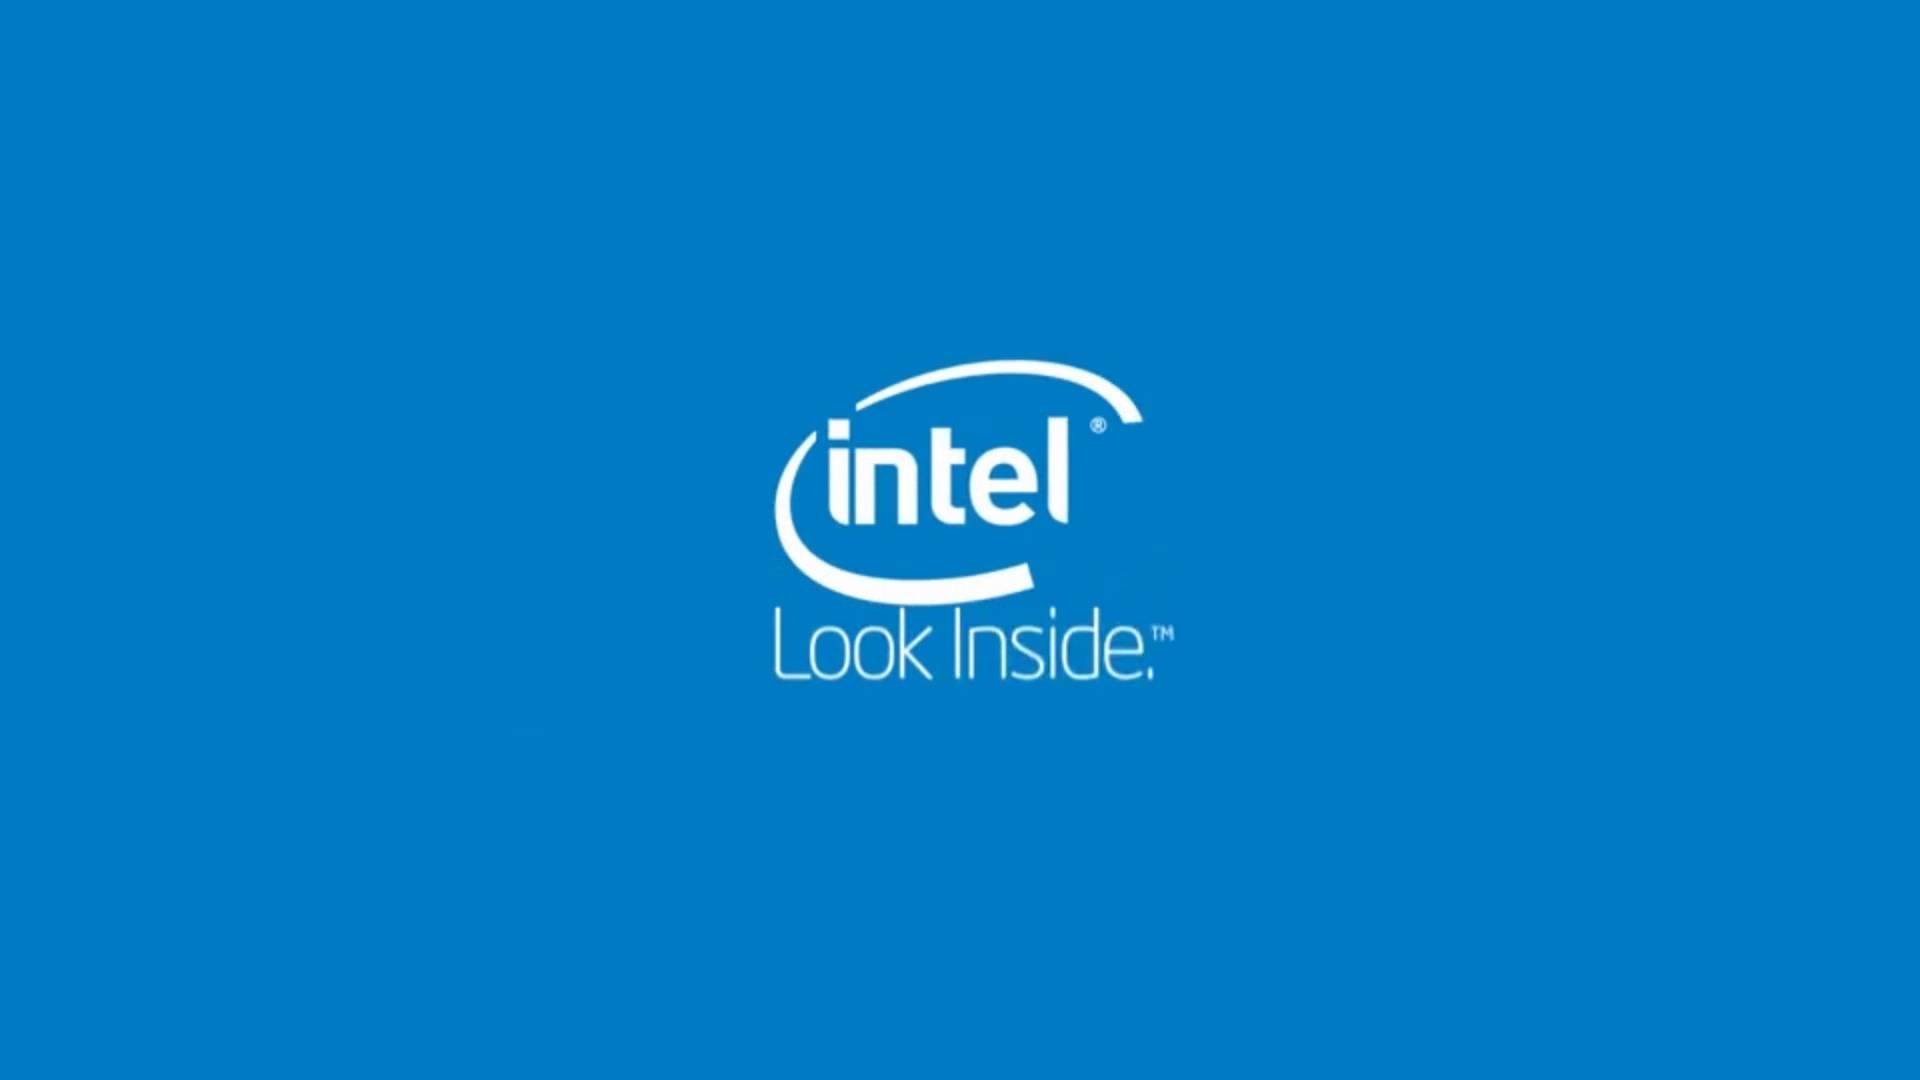 Intel Puter Wallpaper Background X